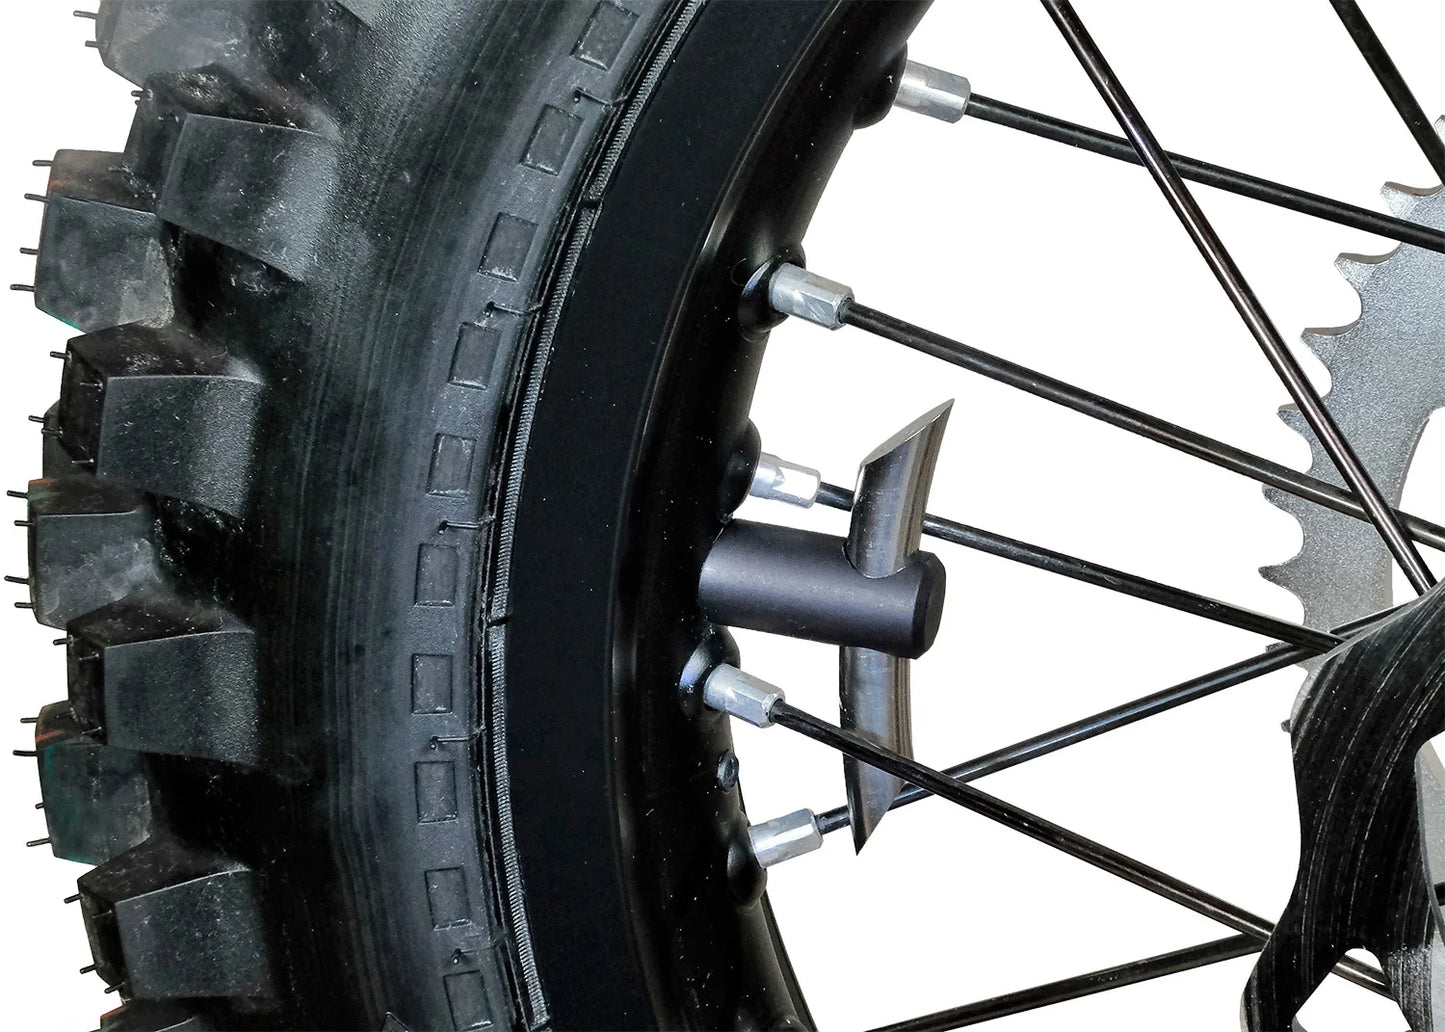 BPX360™ Motorcycle Wheel Balancer Kit